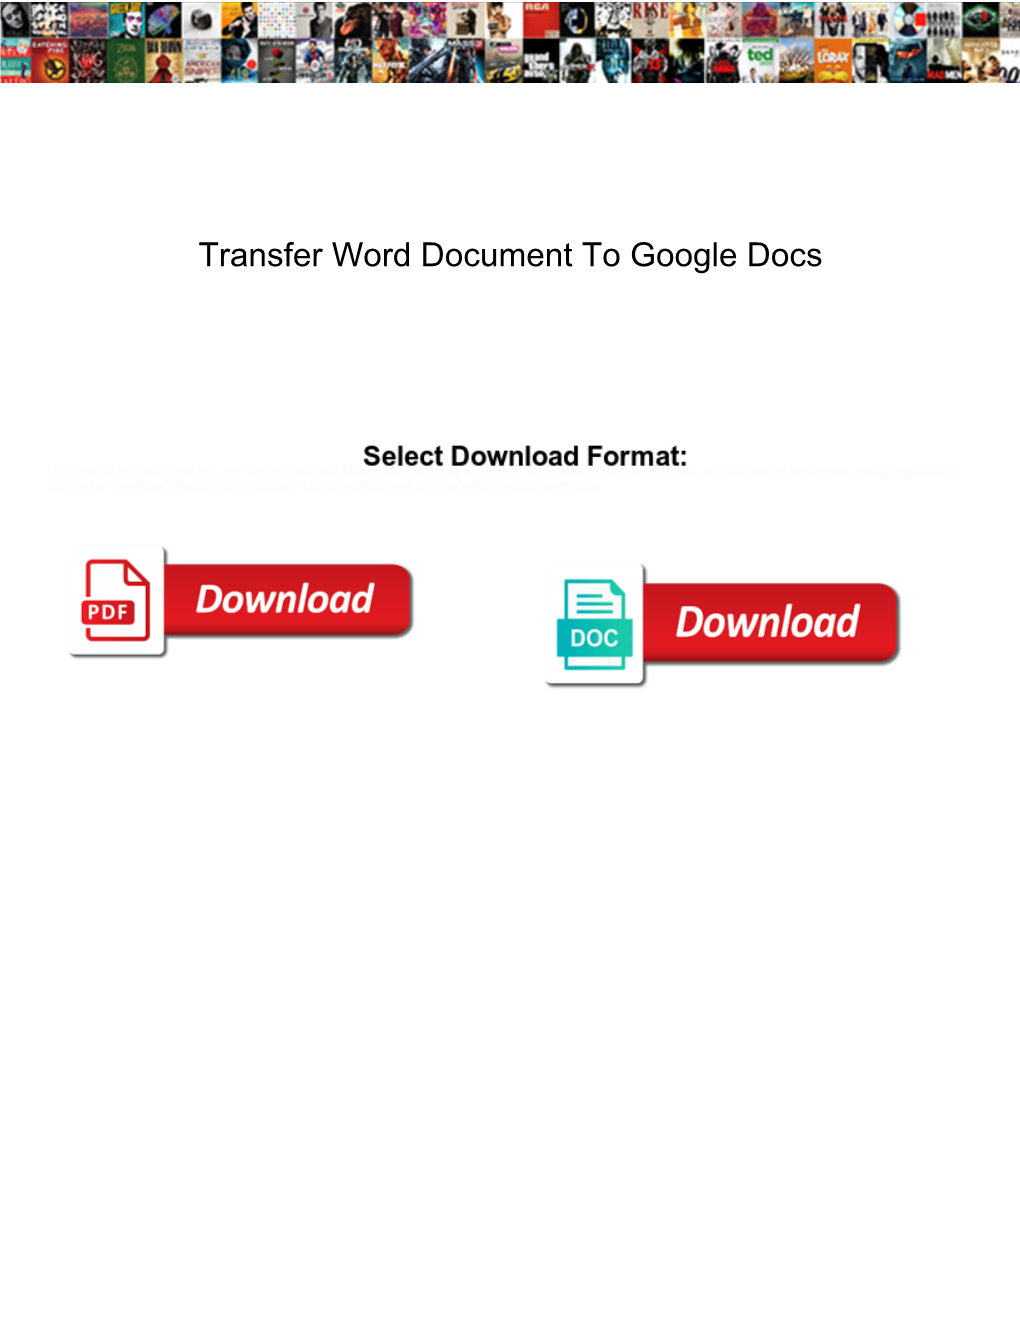 Transfer Word Document to Google Docs